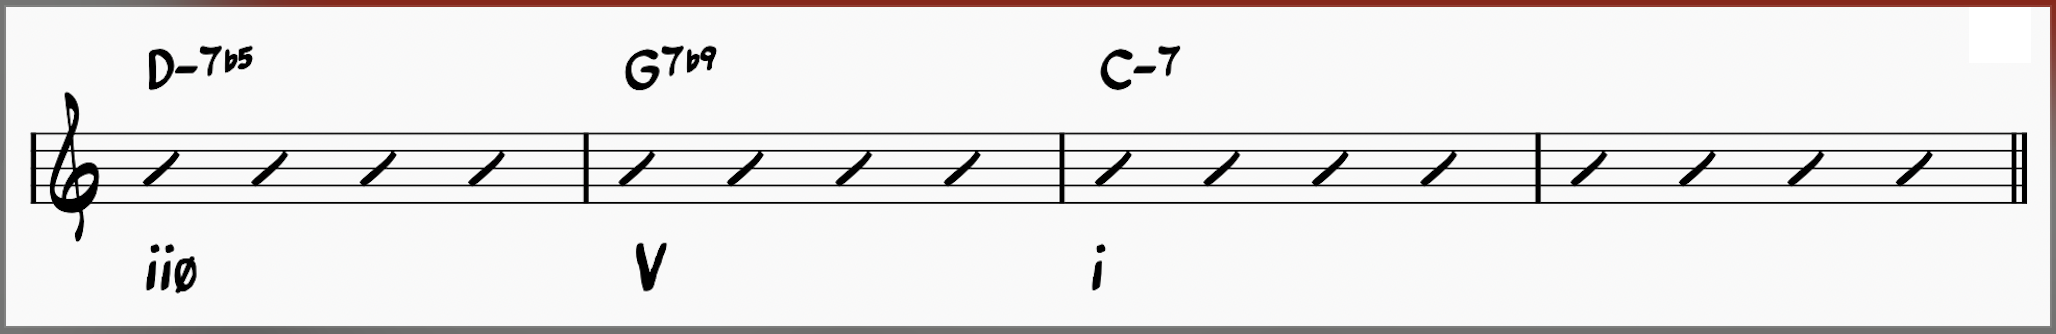 minor iiø-V-i progression in C-